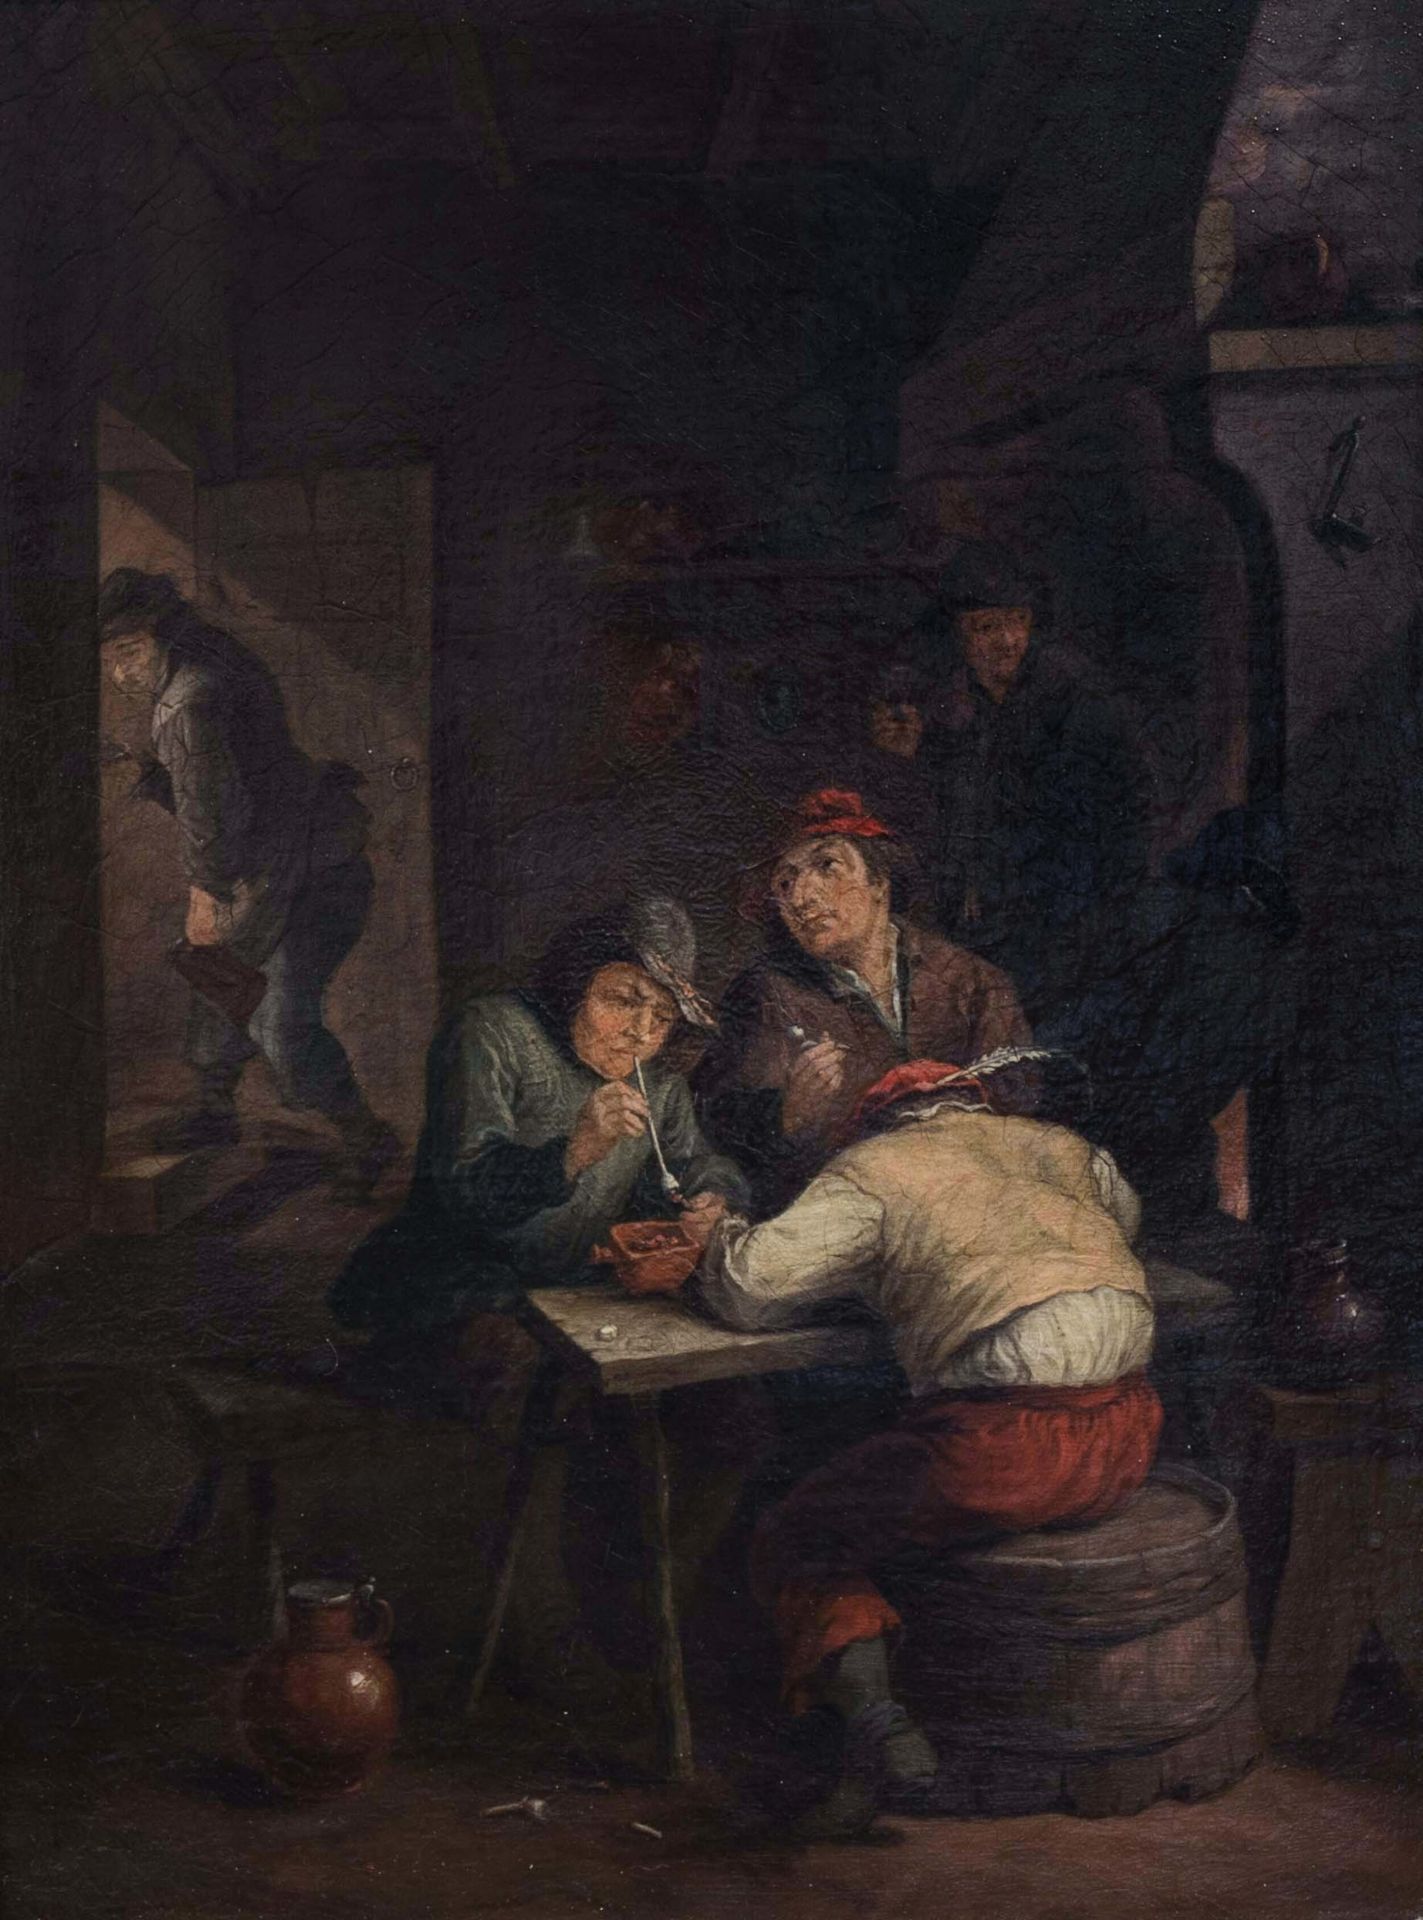 Flemish school, manner of Adriaen Jansz. van Ostade (1610-1685): Peasants in a tavern, 17th/18th C.